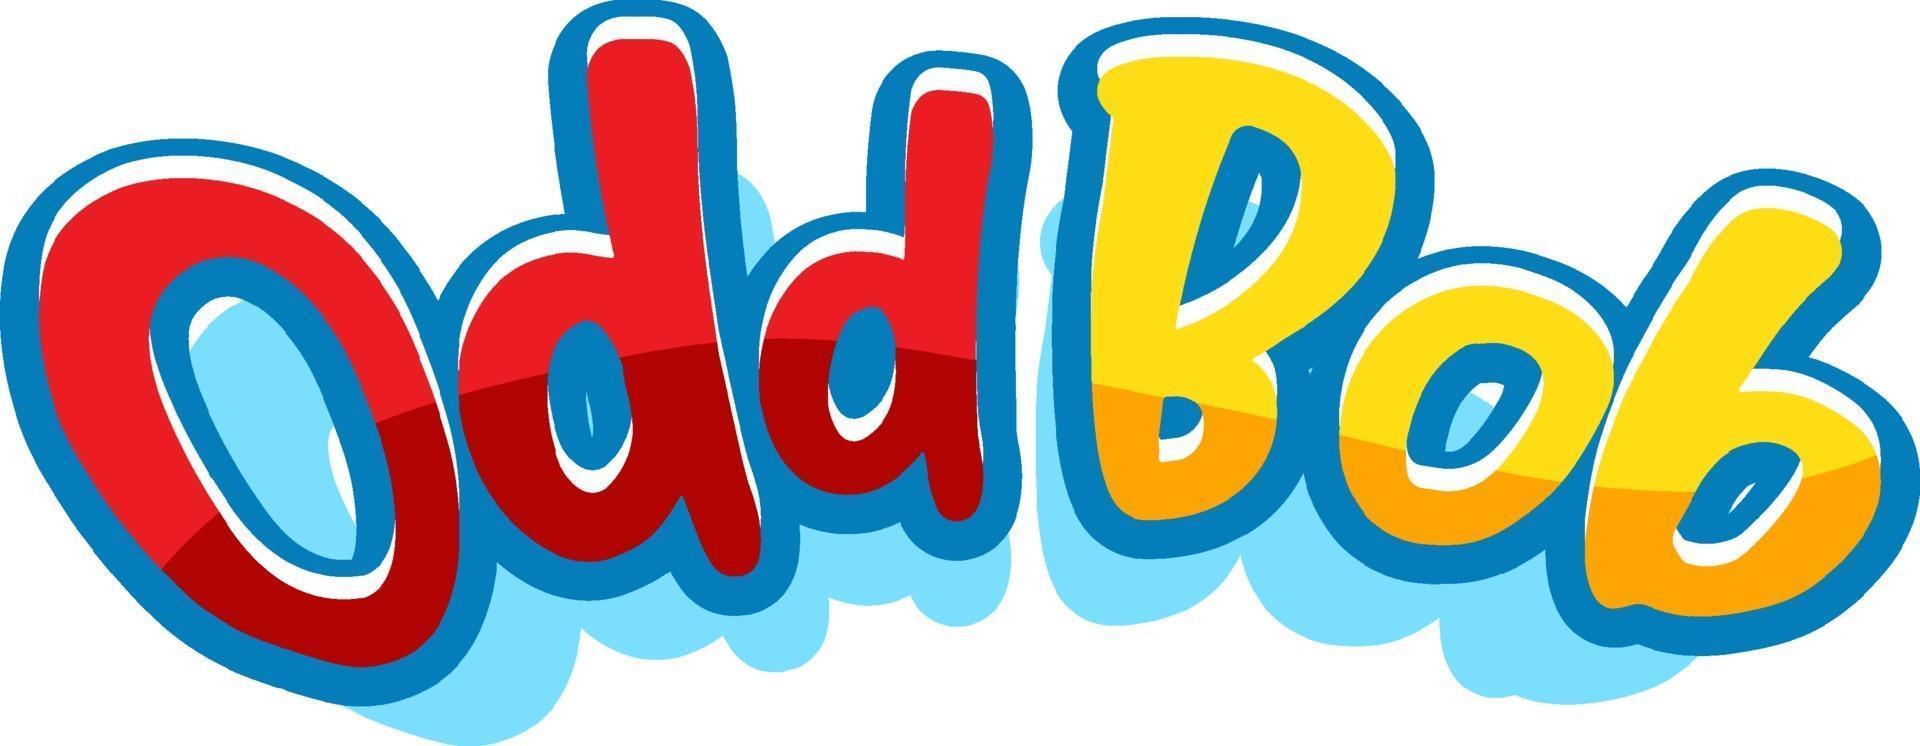 Odd Bob logo font design vector